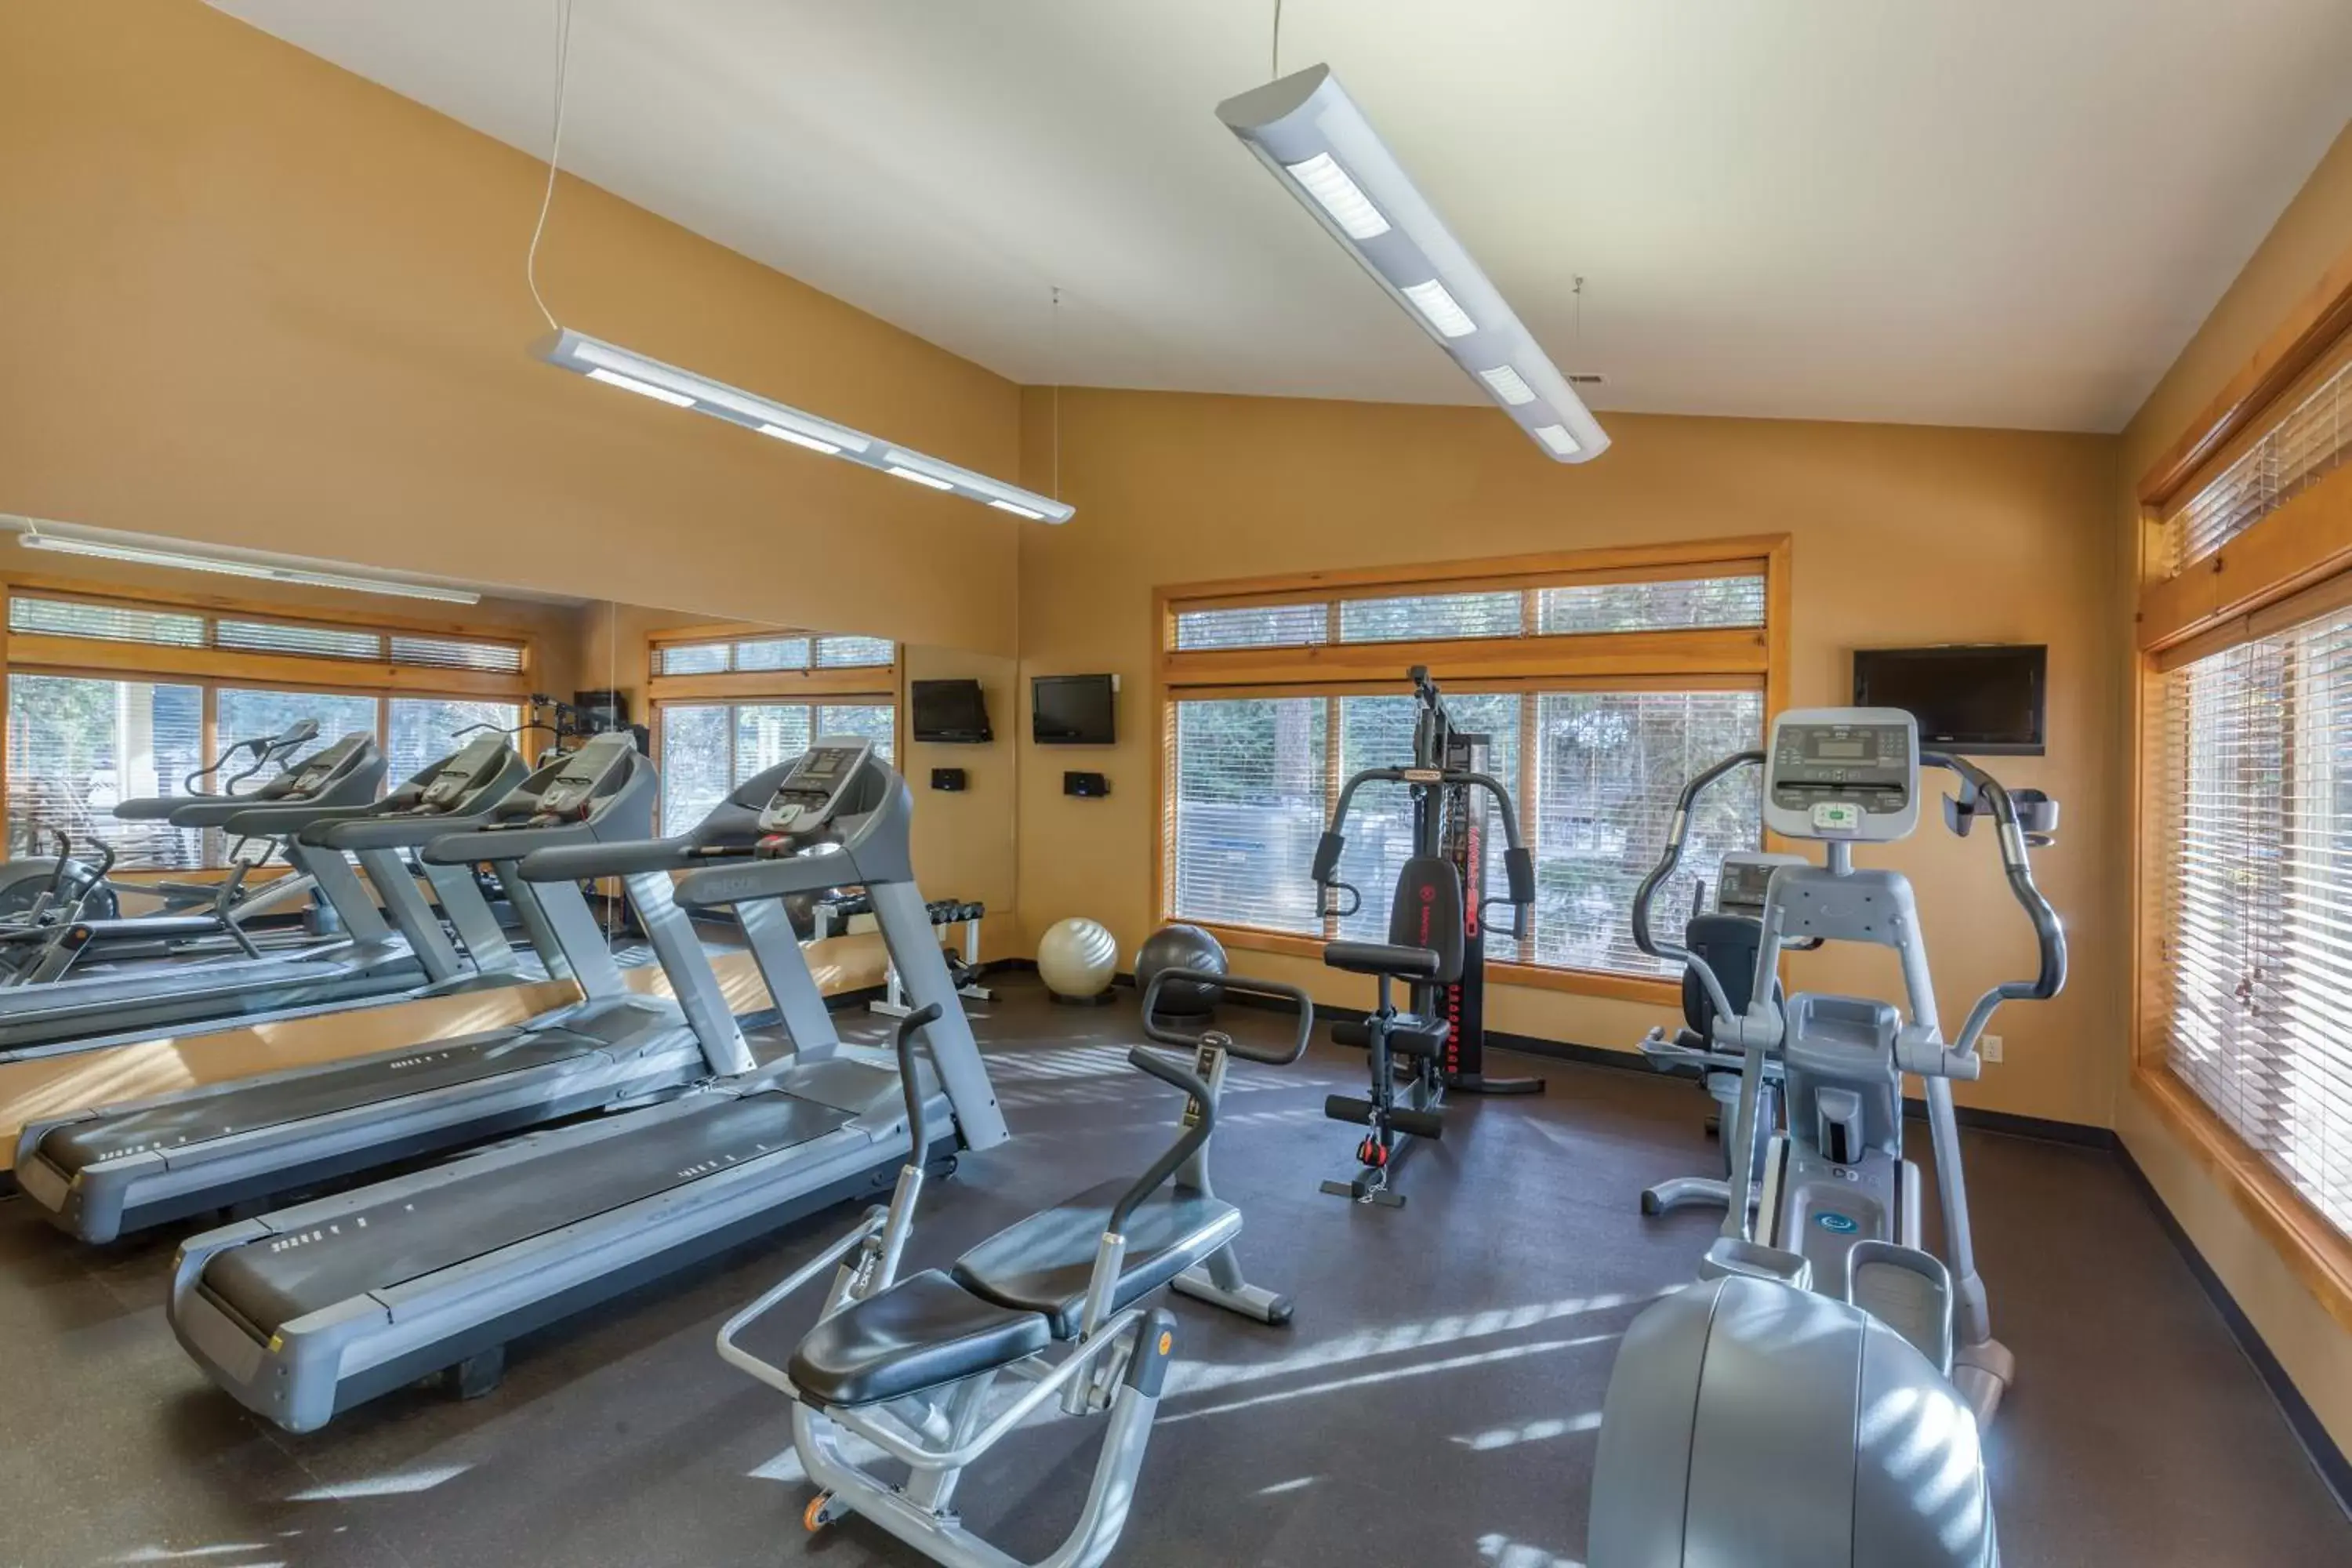 Fitness centre/facilities, Fitness Center/Facilities in WorldMark McCall